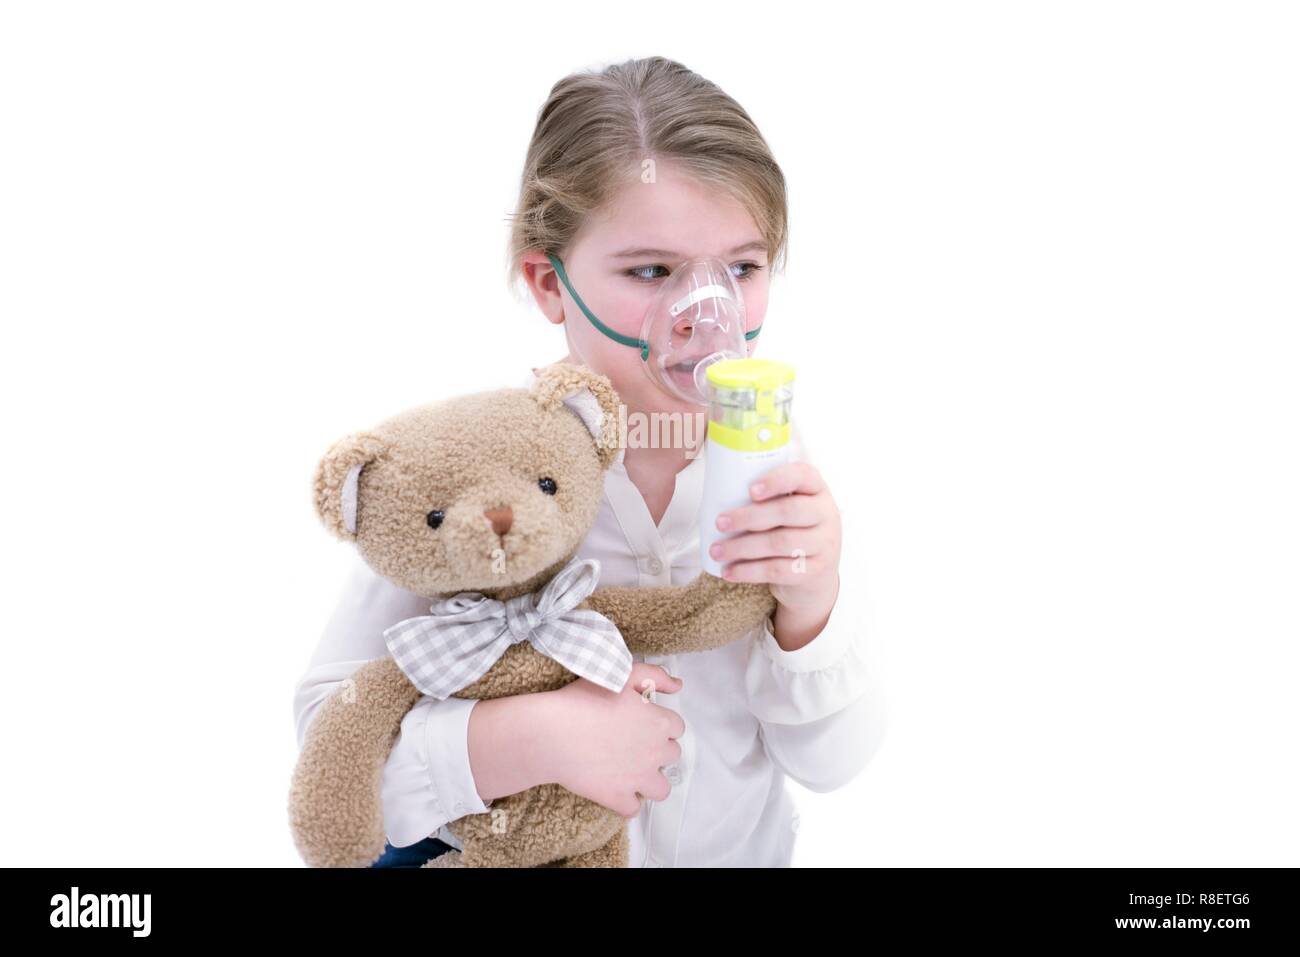 Ragazza giovane con ampolla holding Teddy bear. Foto Stock